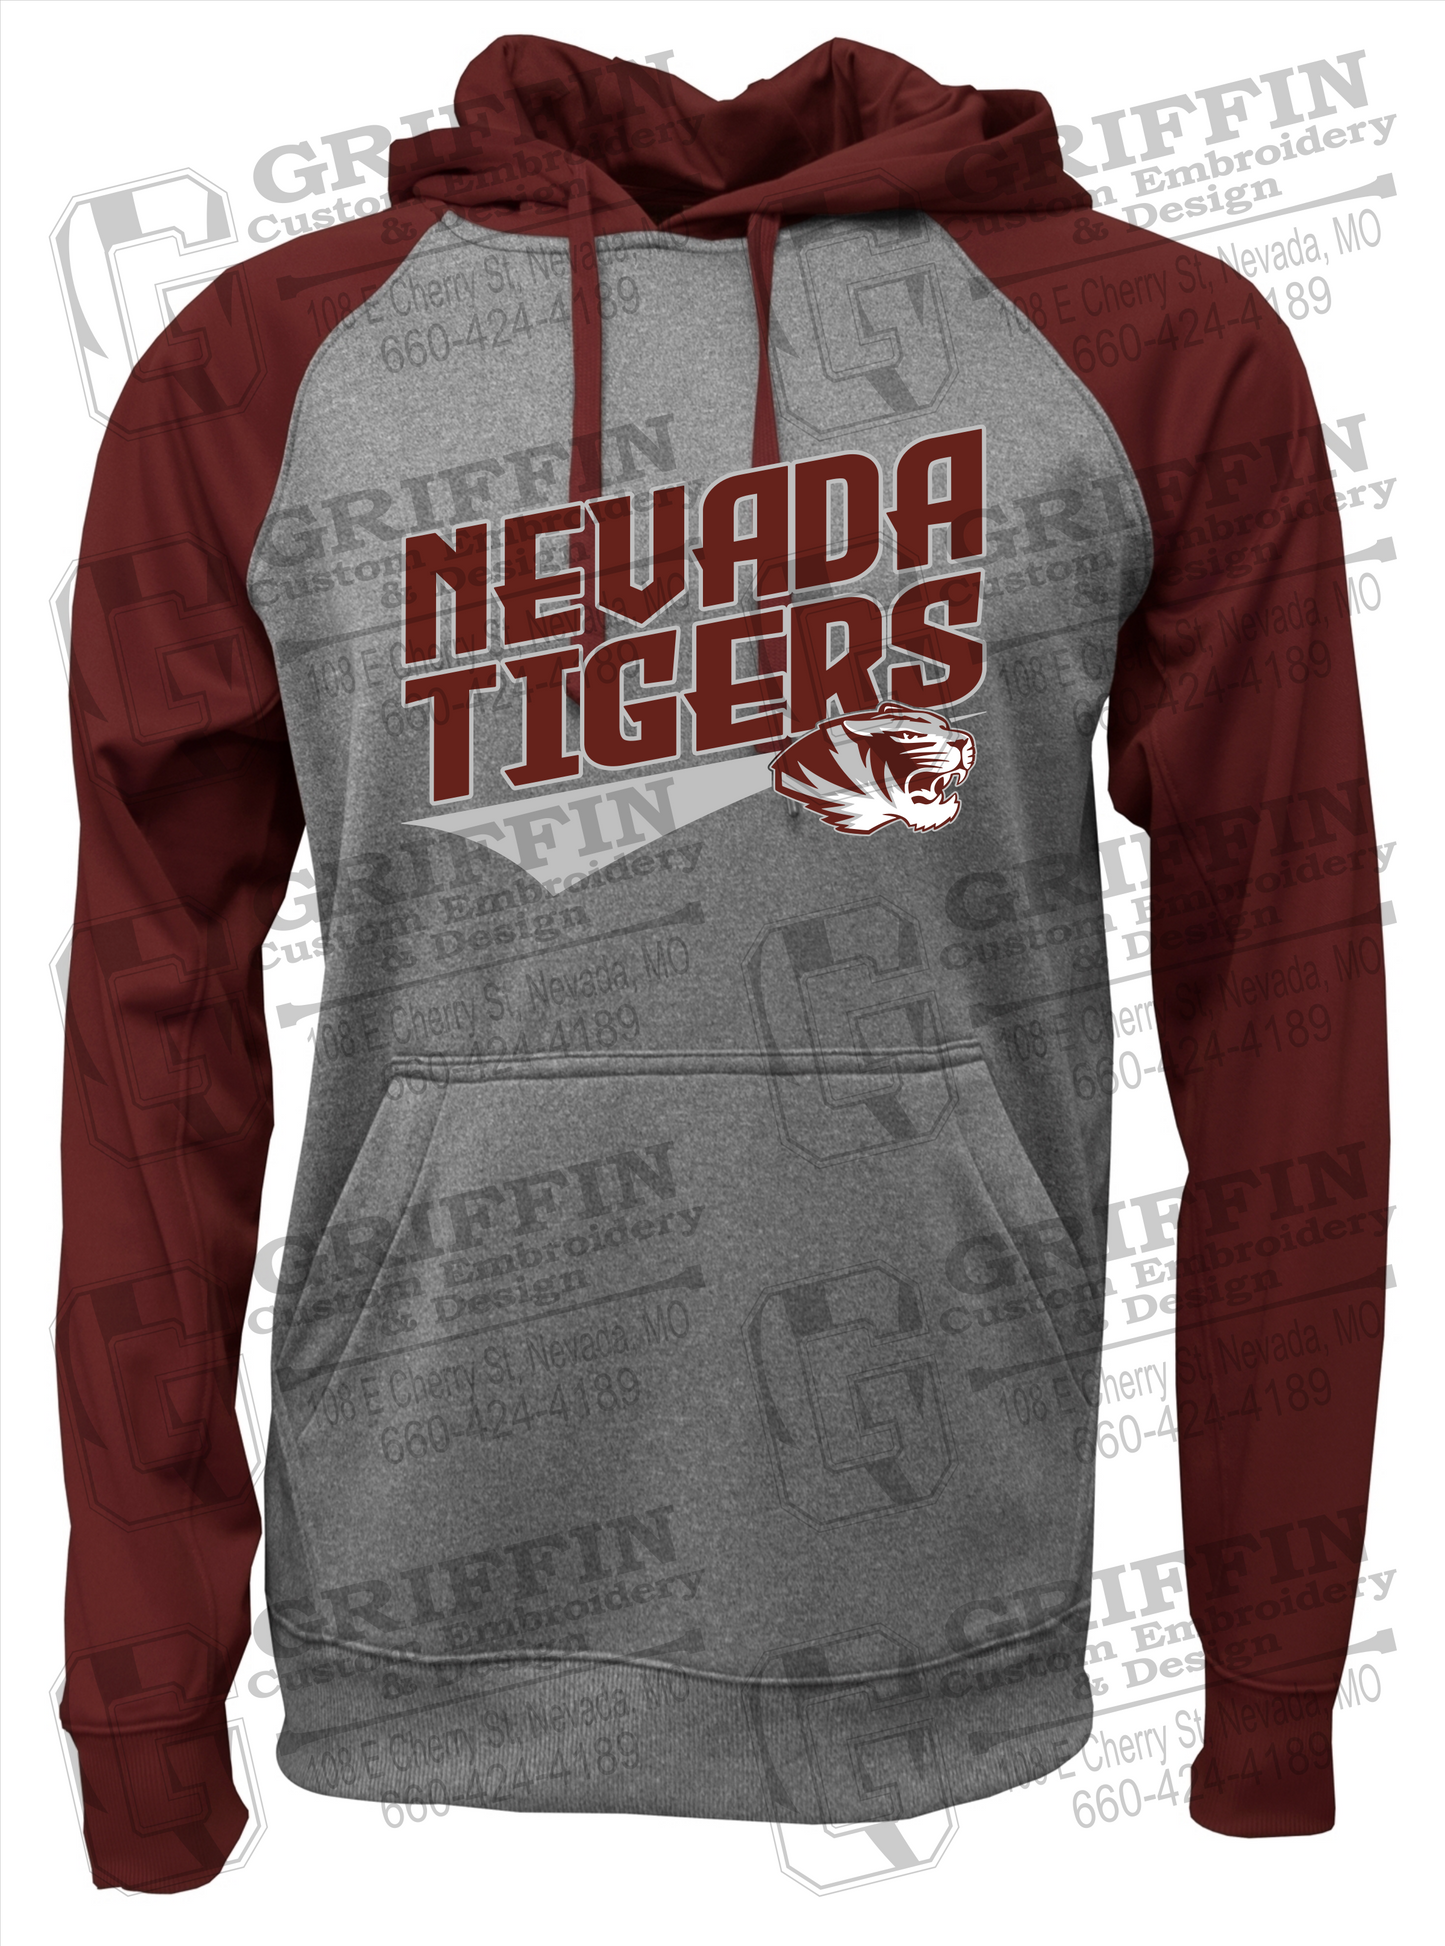 Nevada Tigers 21-E Raglan Hoodie